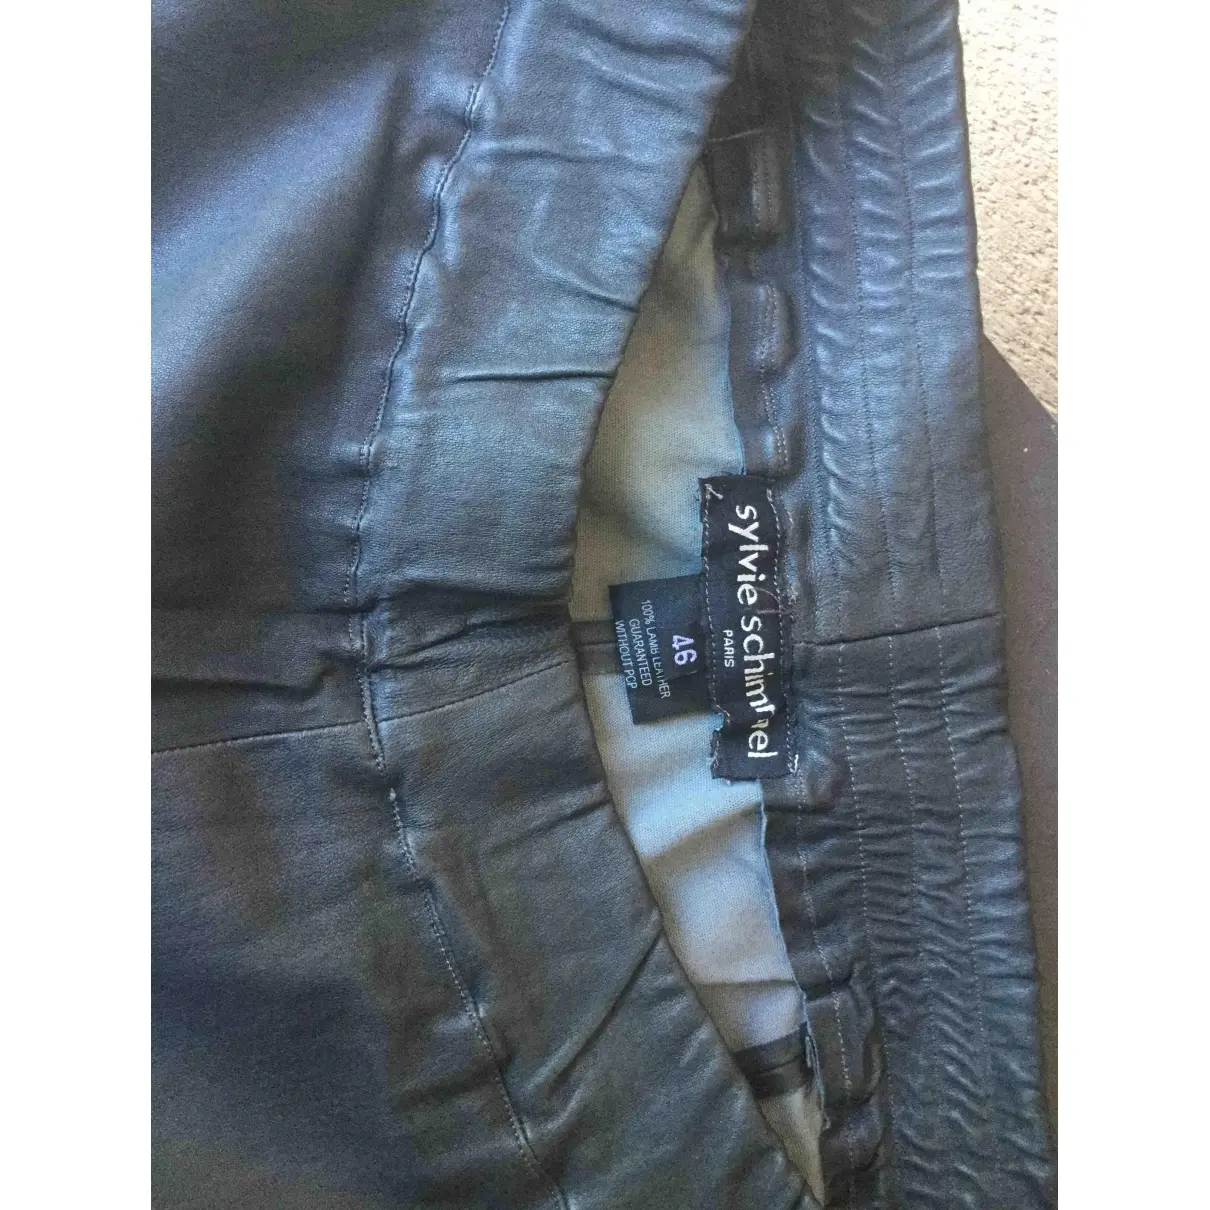 Buy Sylvie Schimmel Leather slim pants online